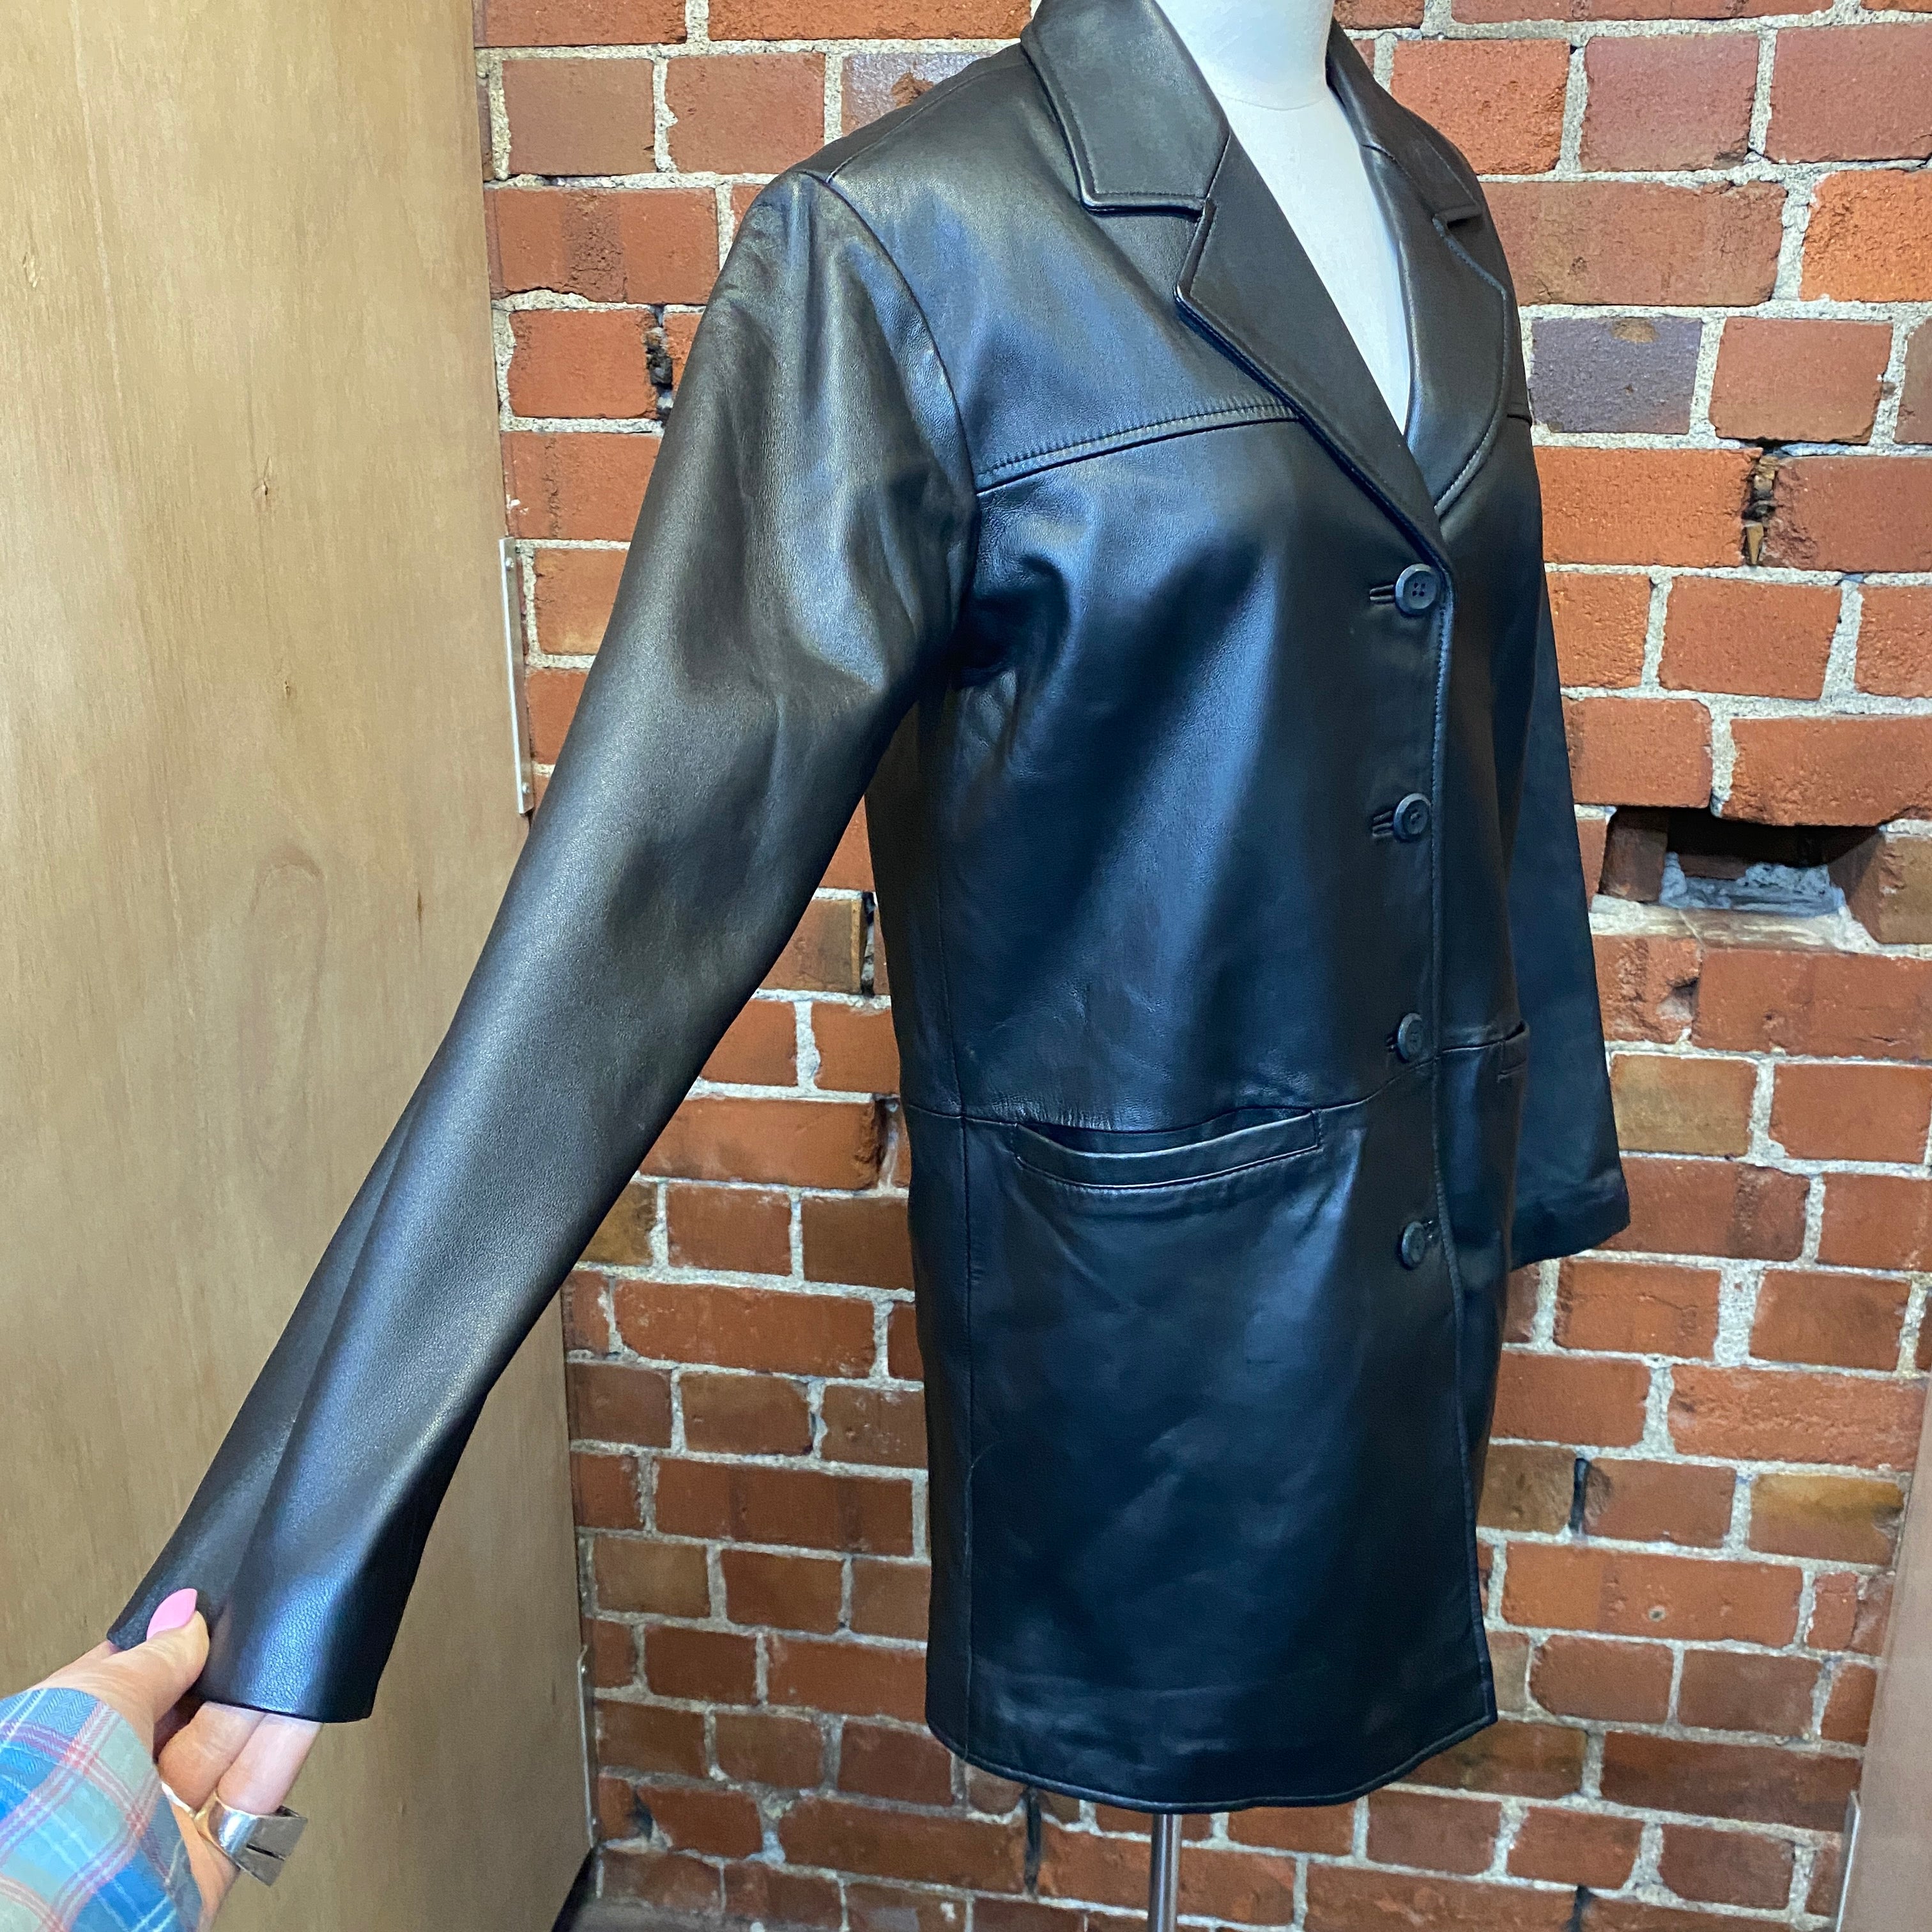 2000's Genuine leather jacket